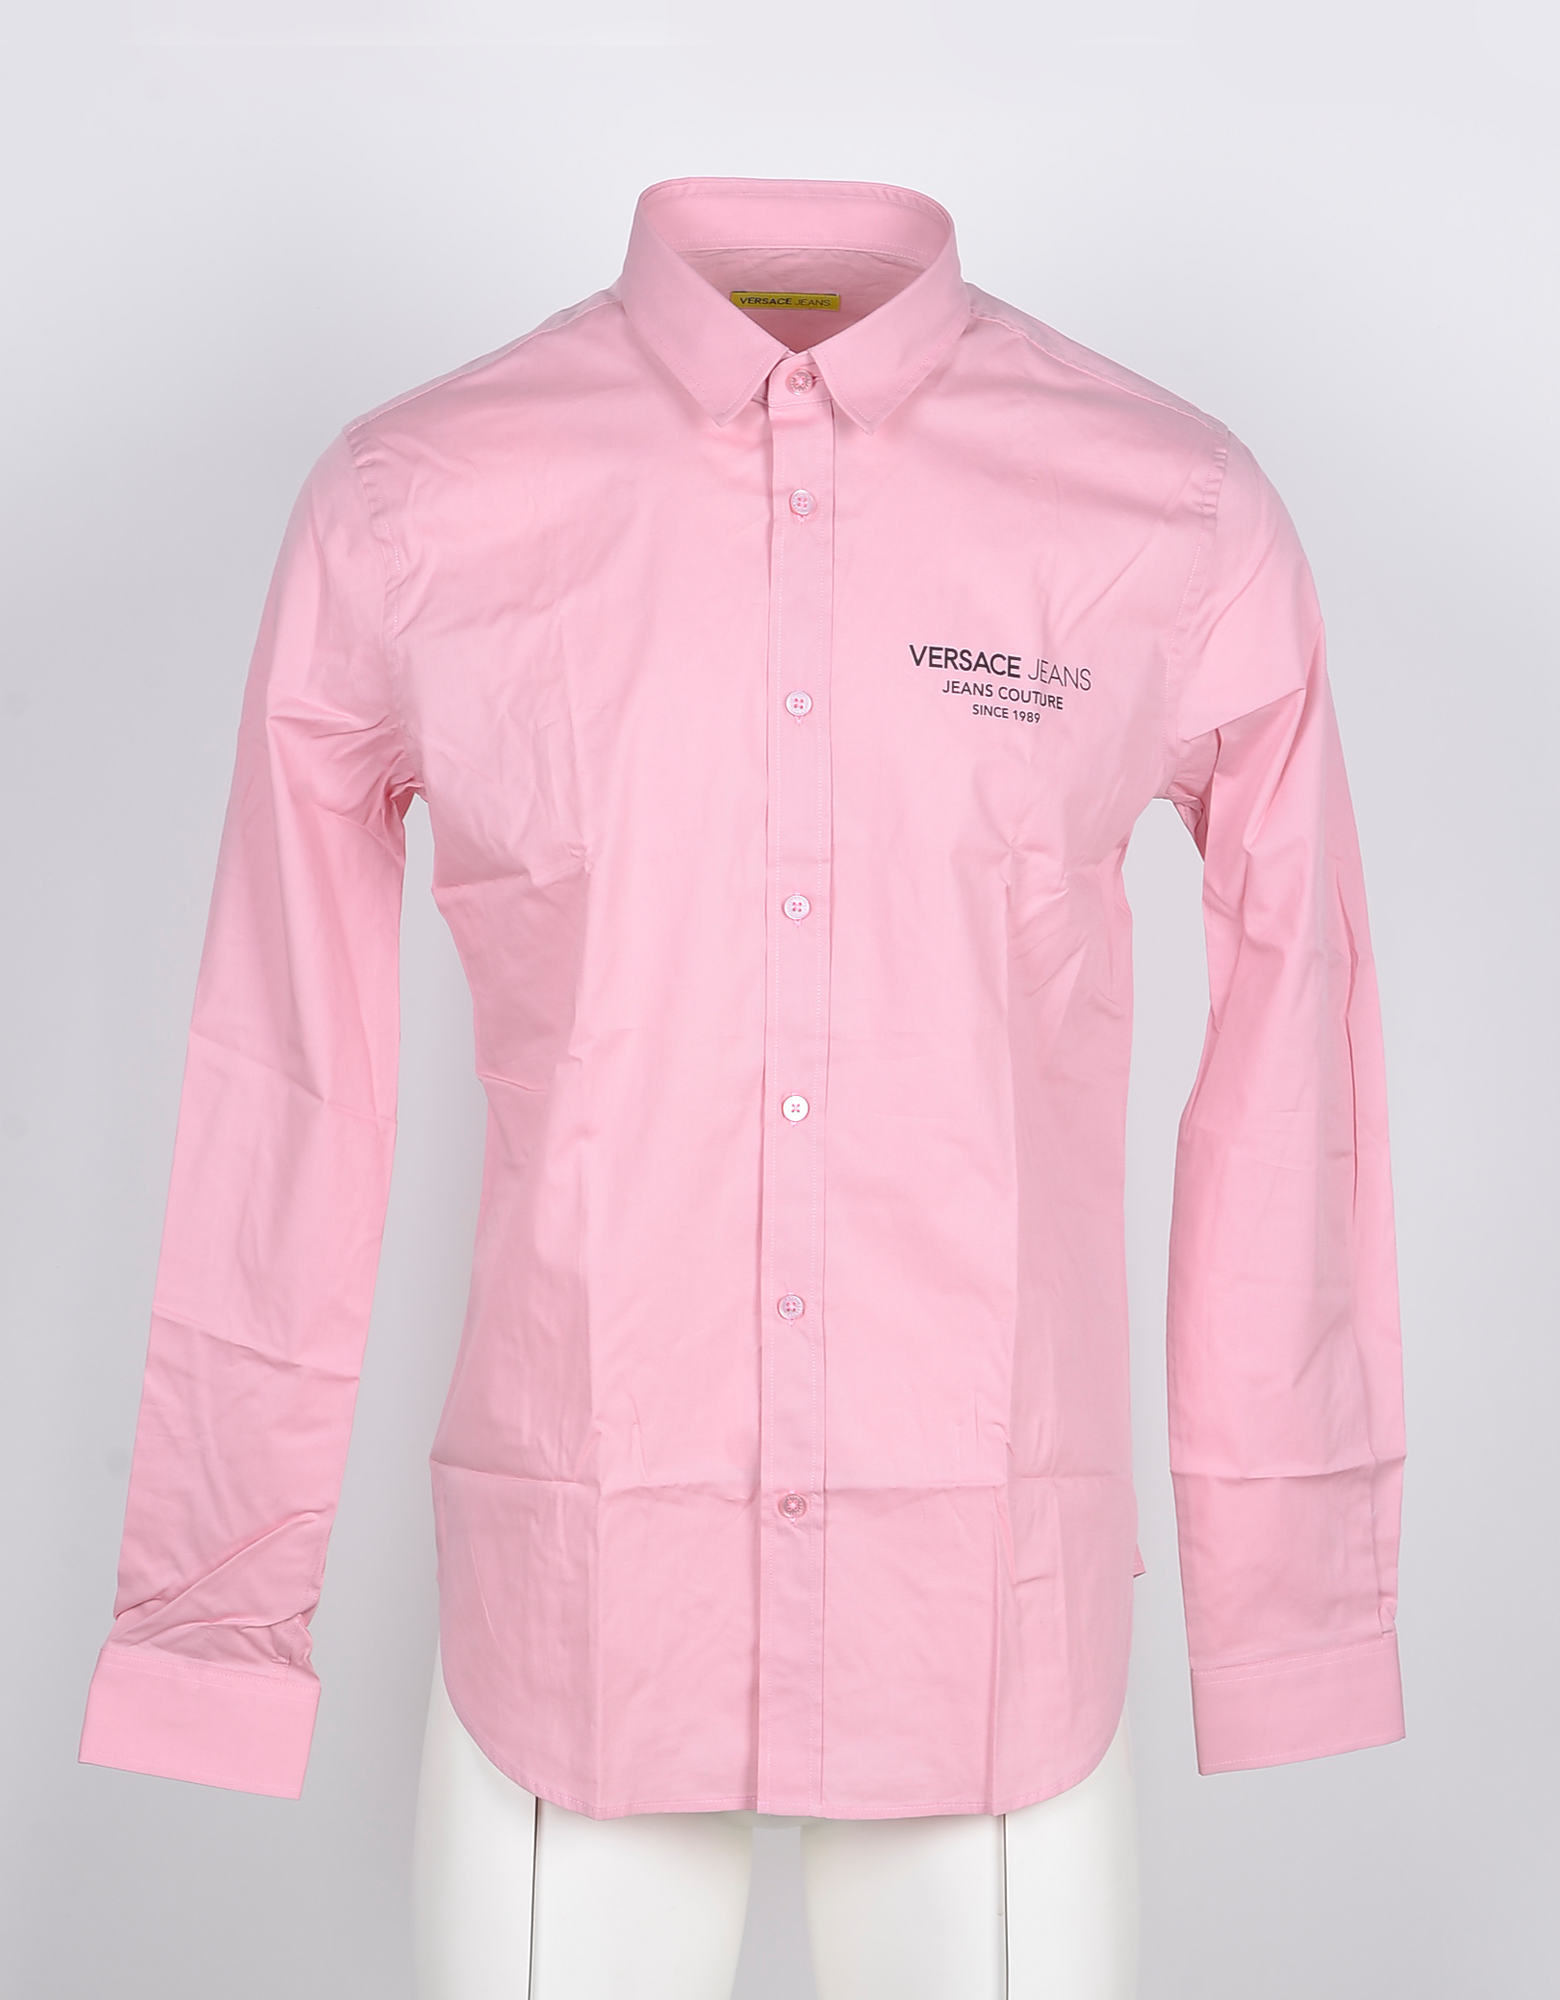 versace shirt pink